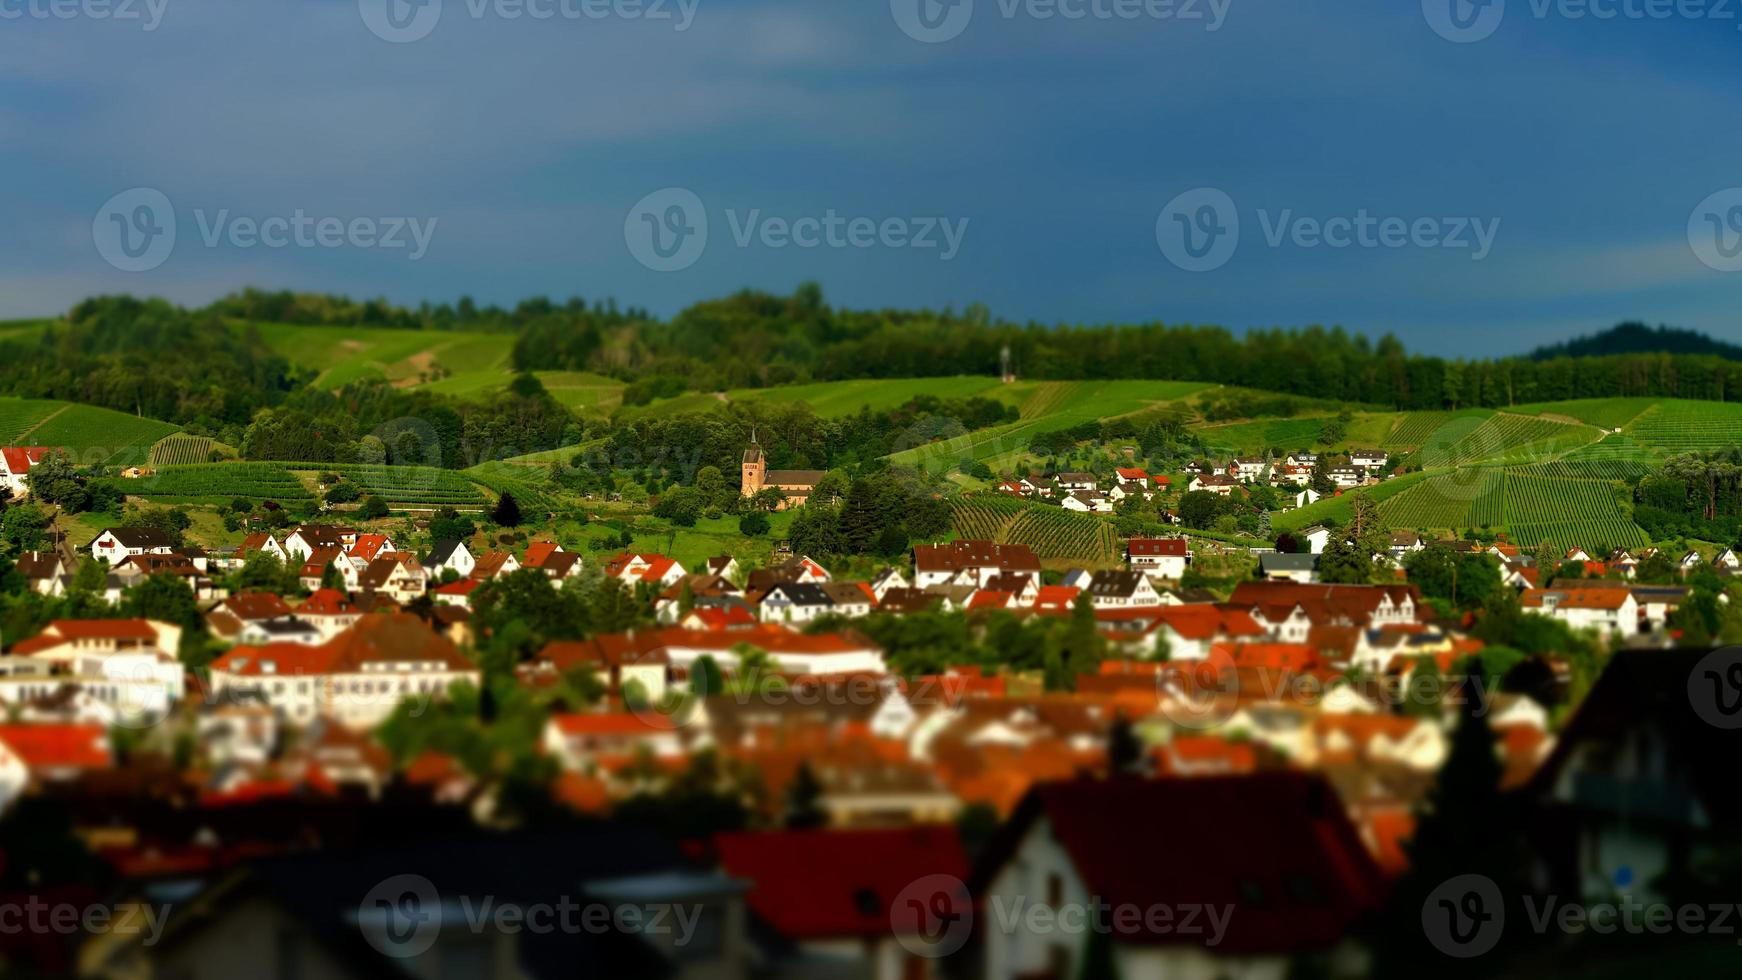 Little cozy german village between the green hills, vineyards in Black Forest photo